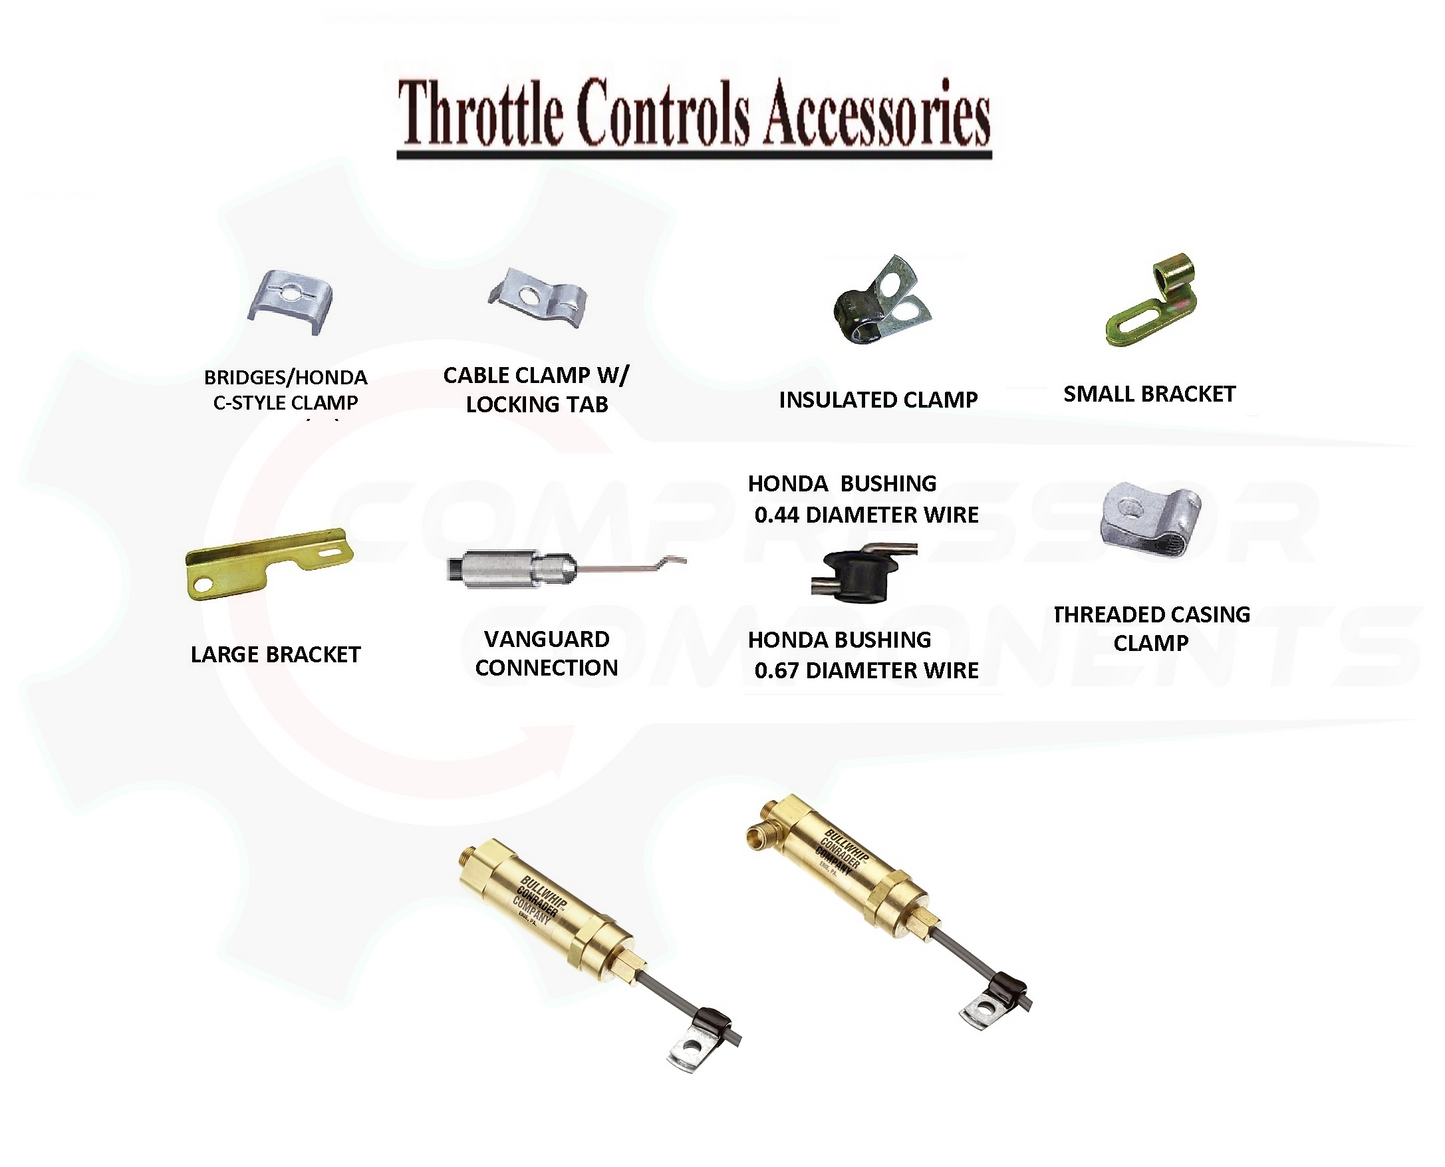 HONDA / BRIGGS & STRATTON - C STYLE THROTTLE CONTROL CABLE CLAMP